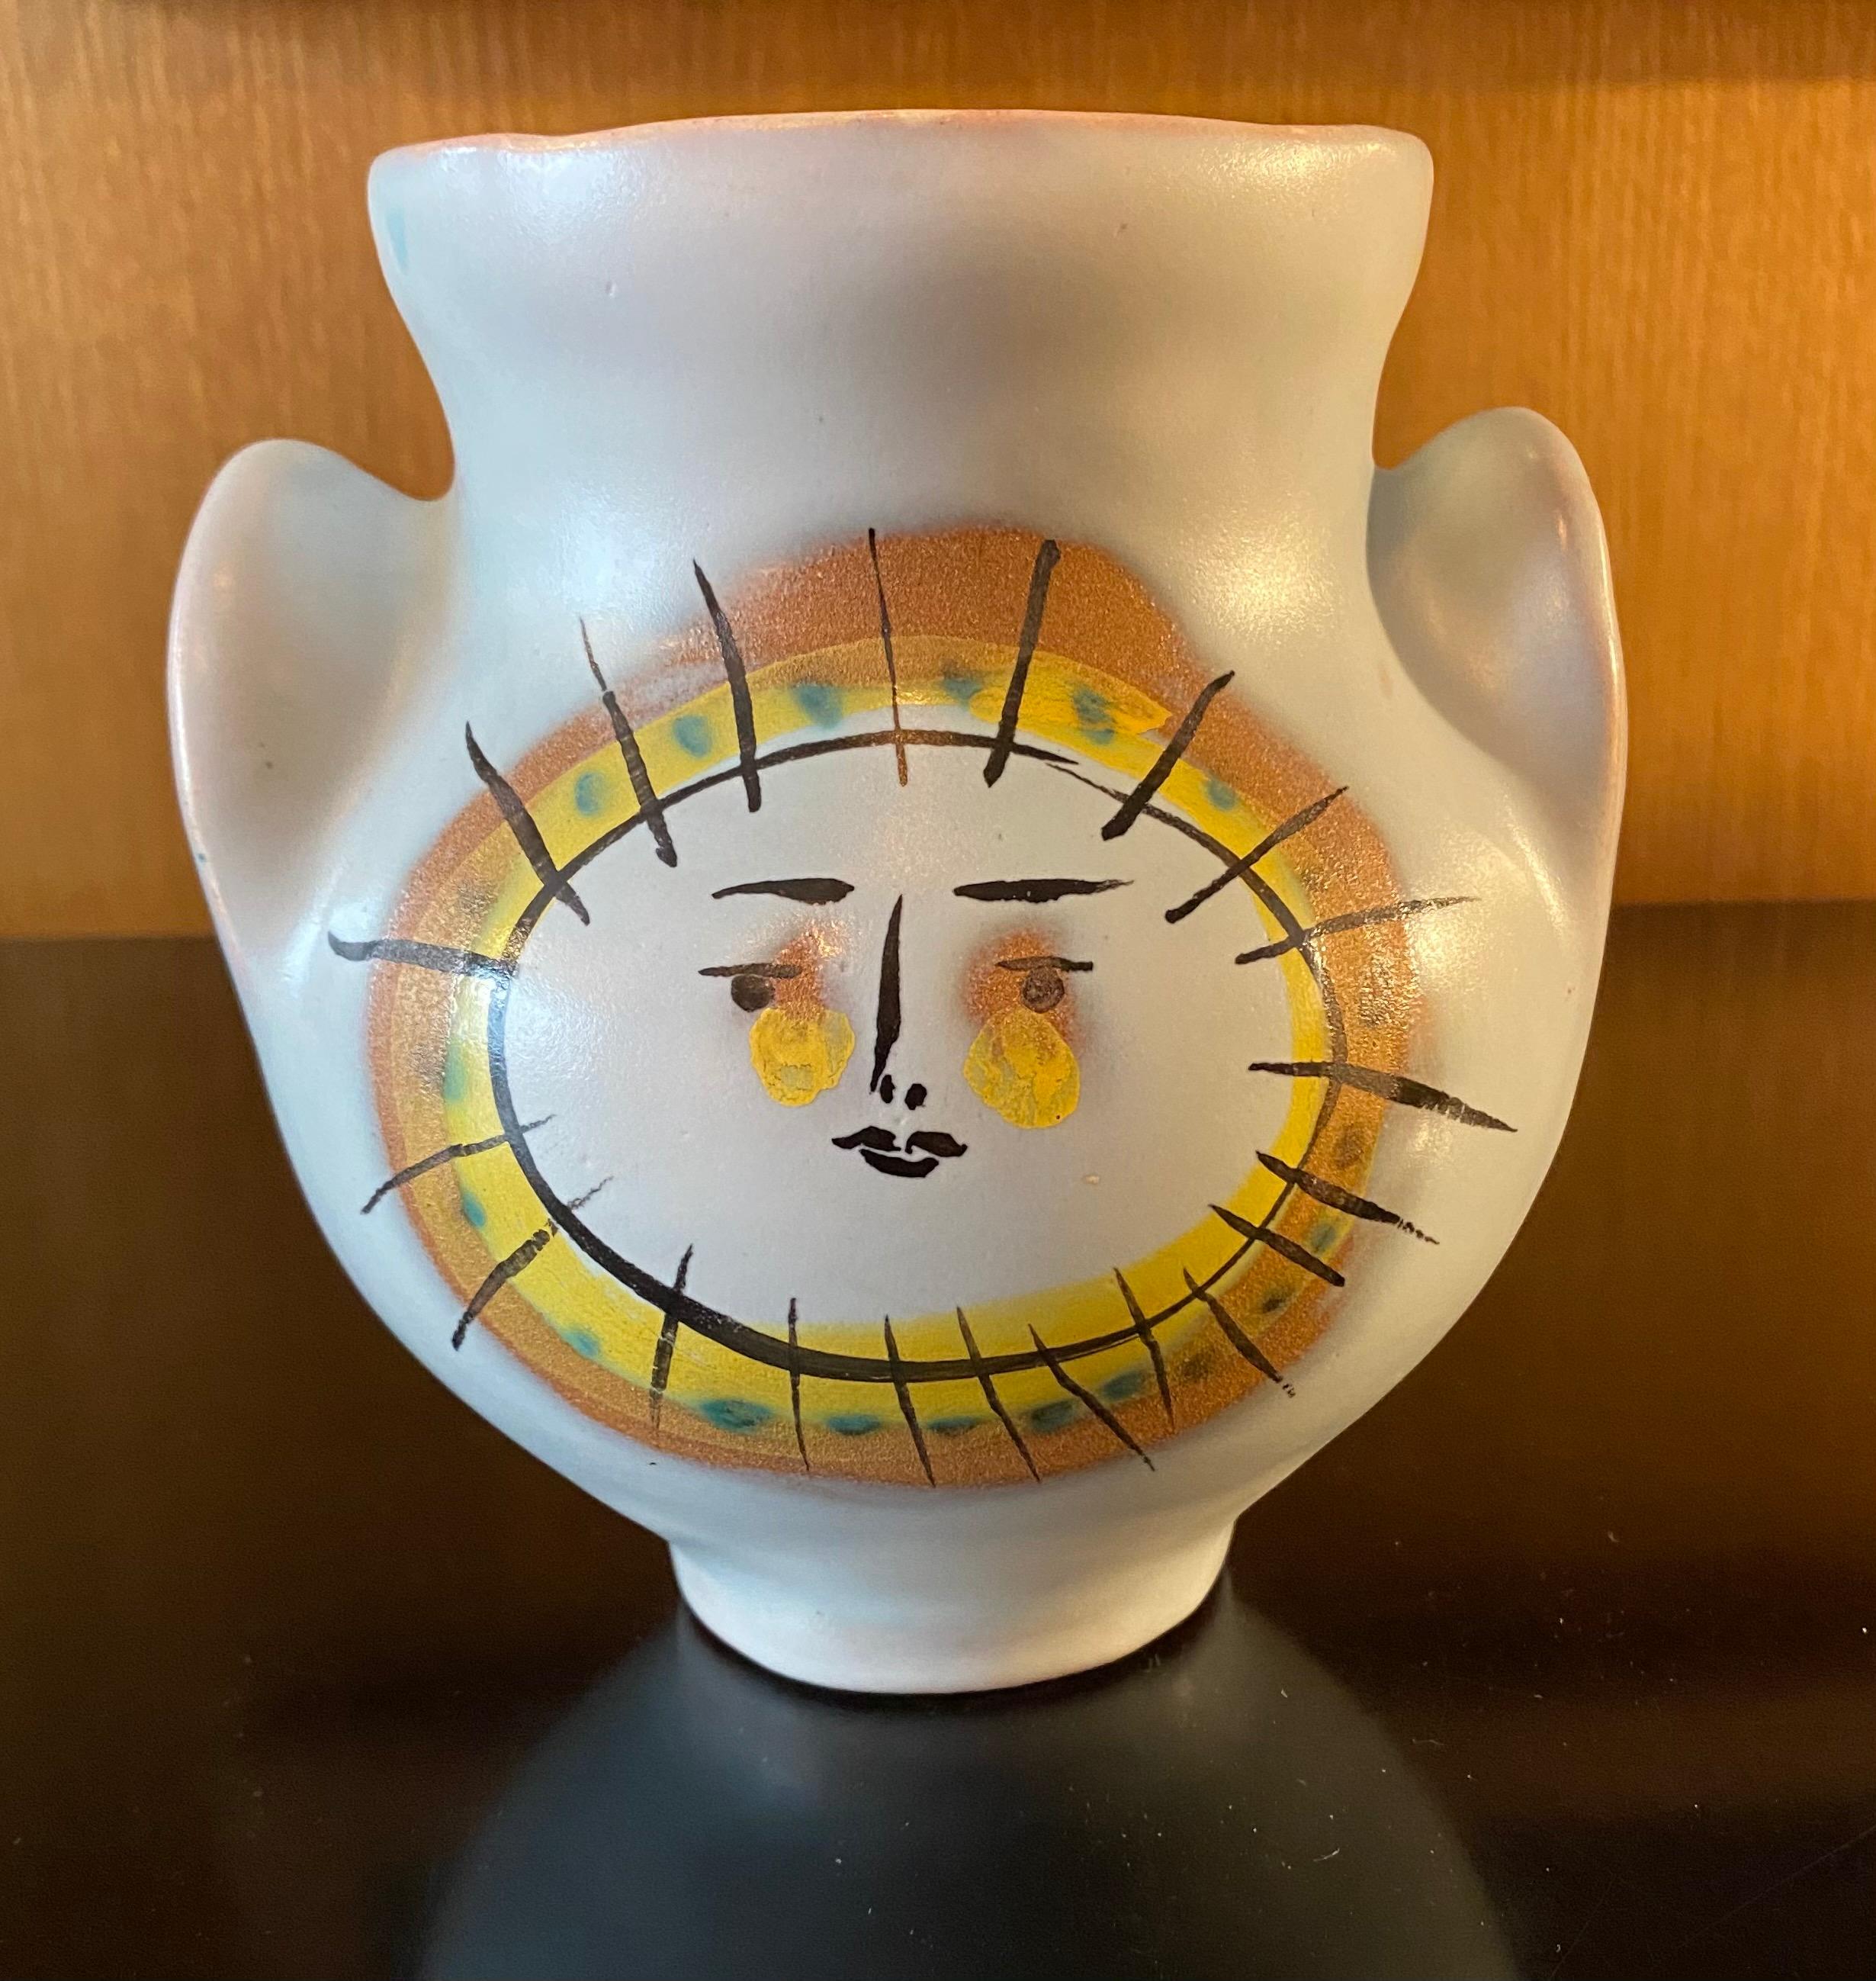 Ceramic vase by Roger Capron, France, 1960s.